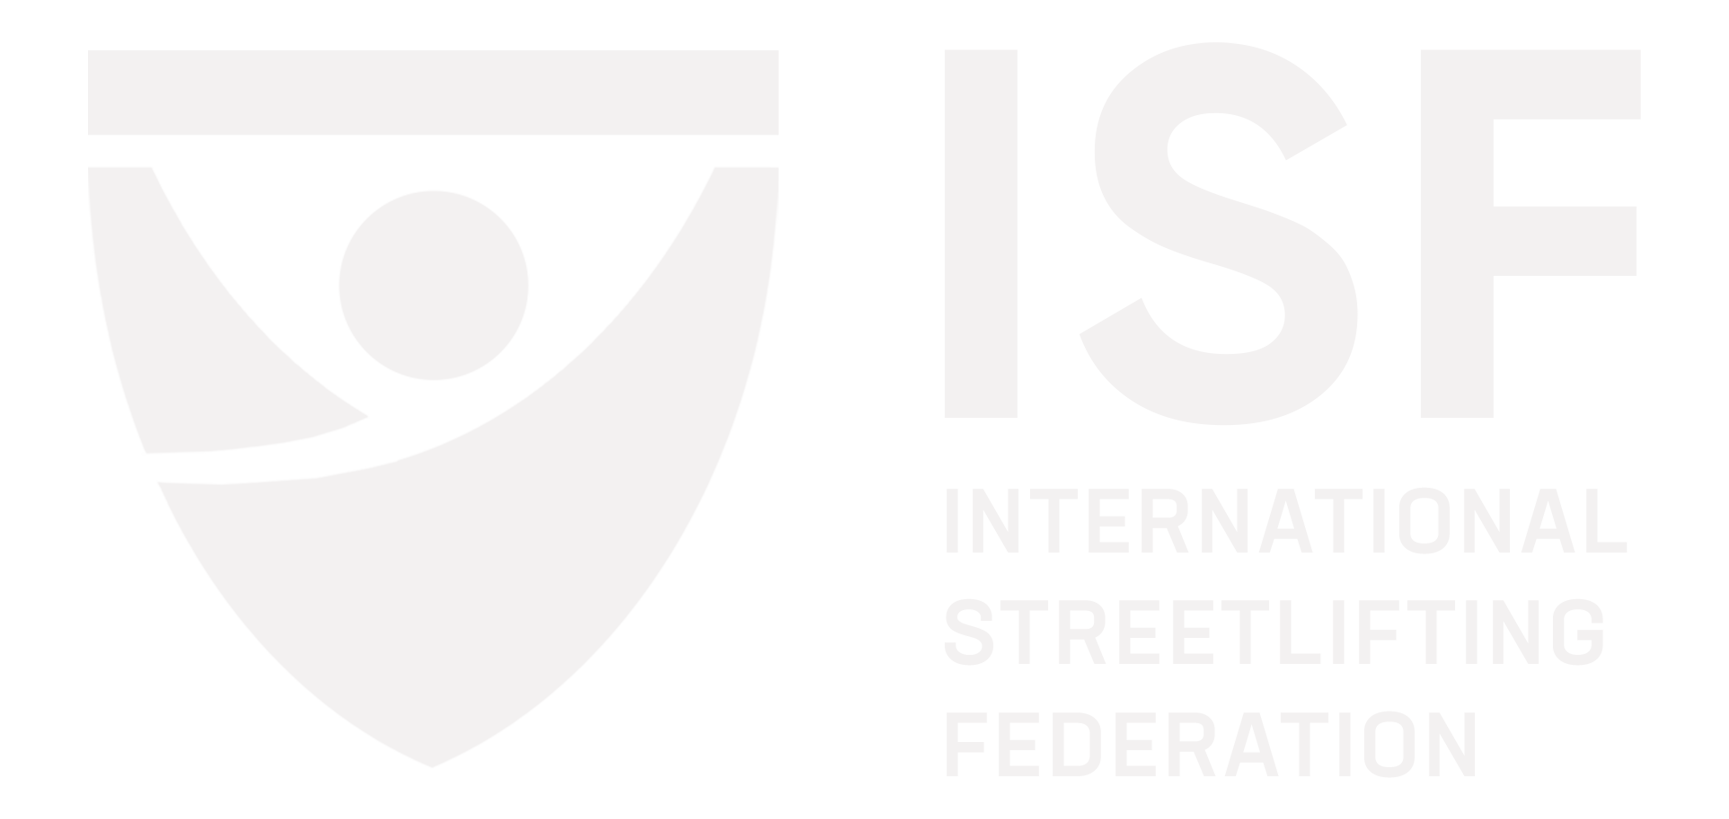 International Streetlifting Federation (ISF World)